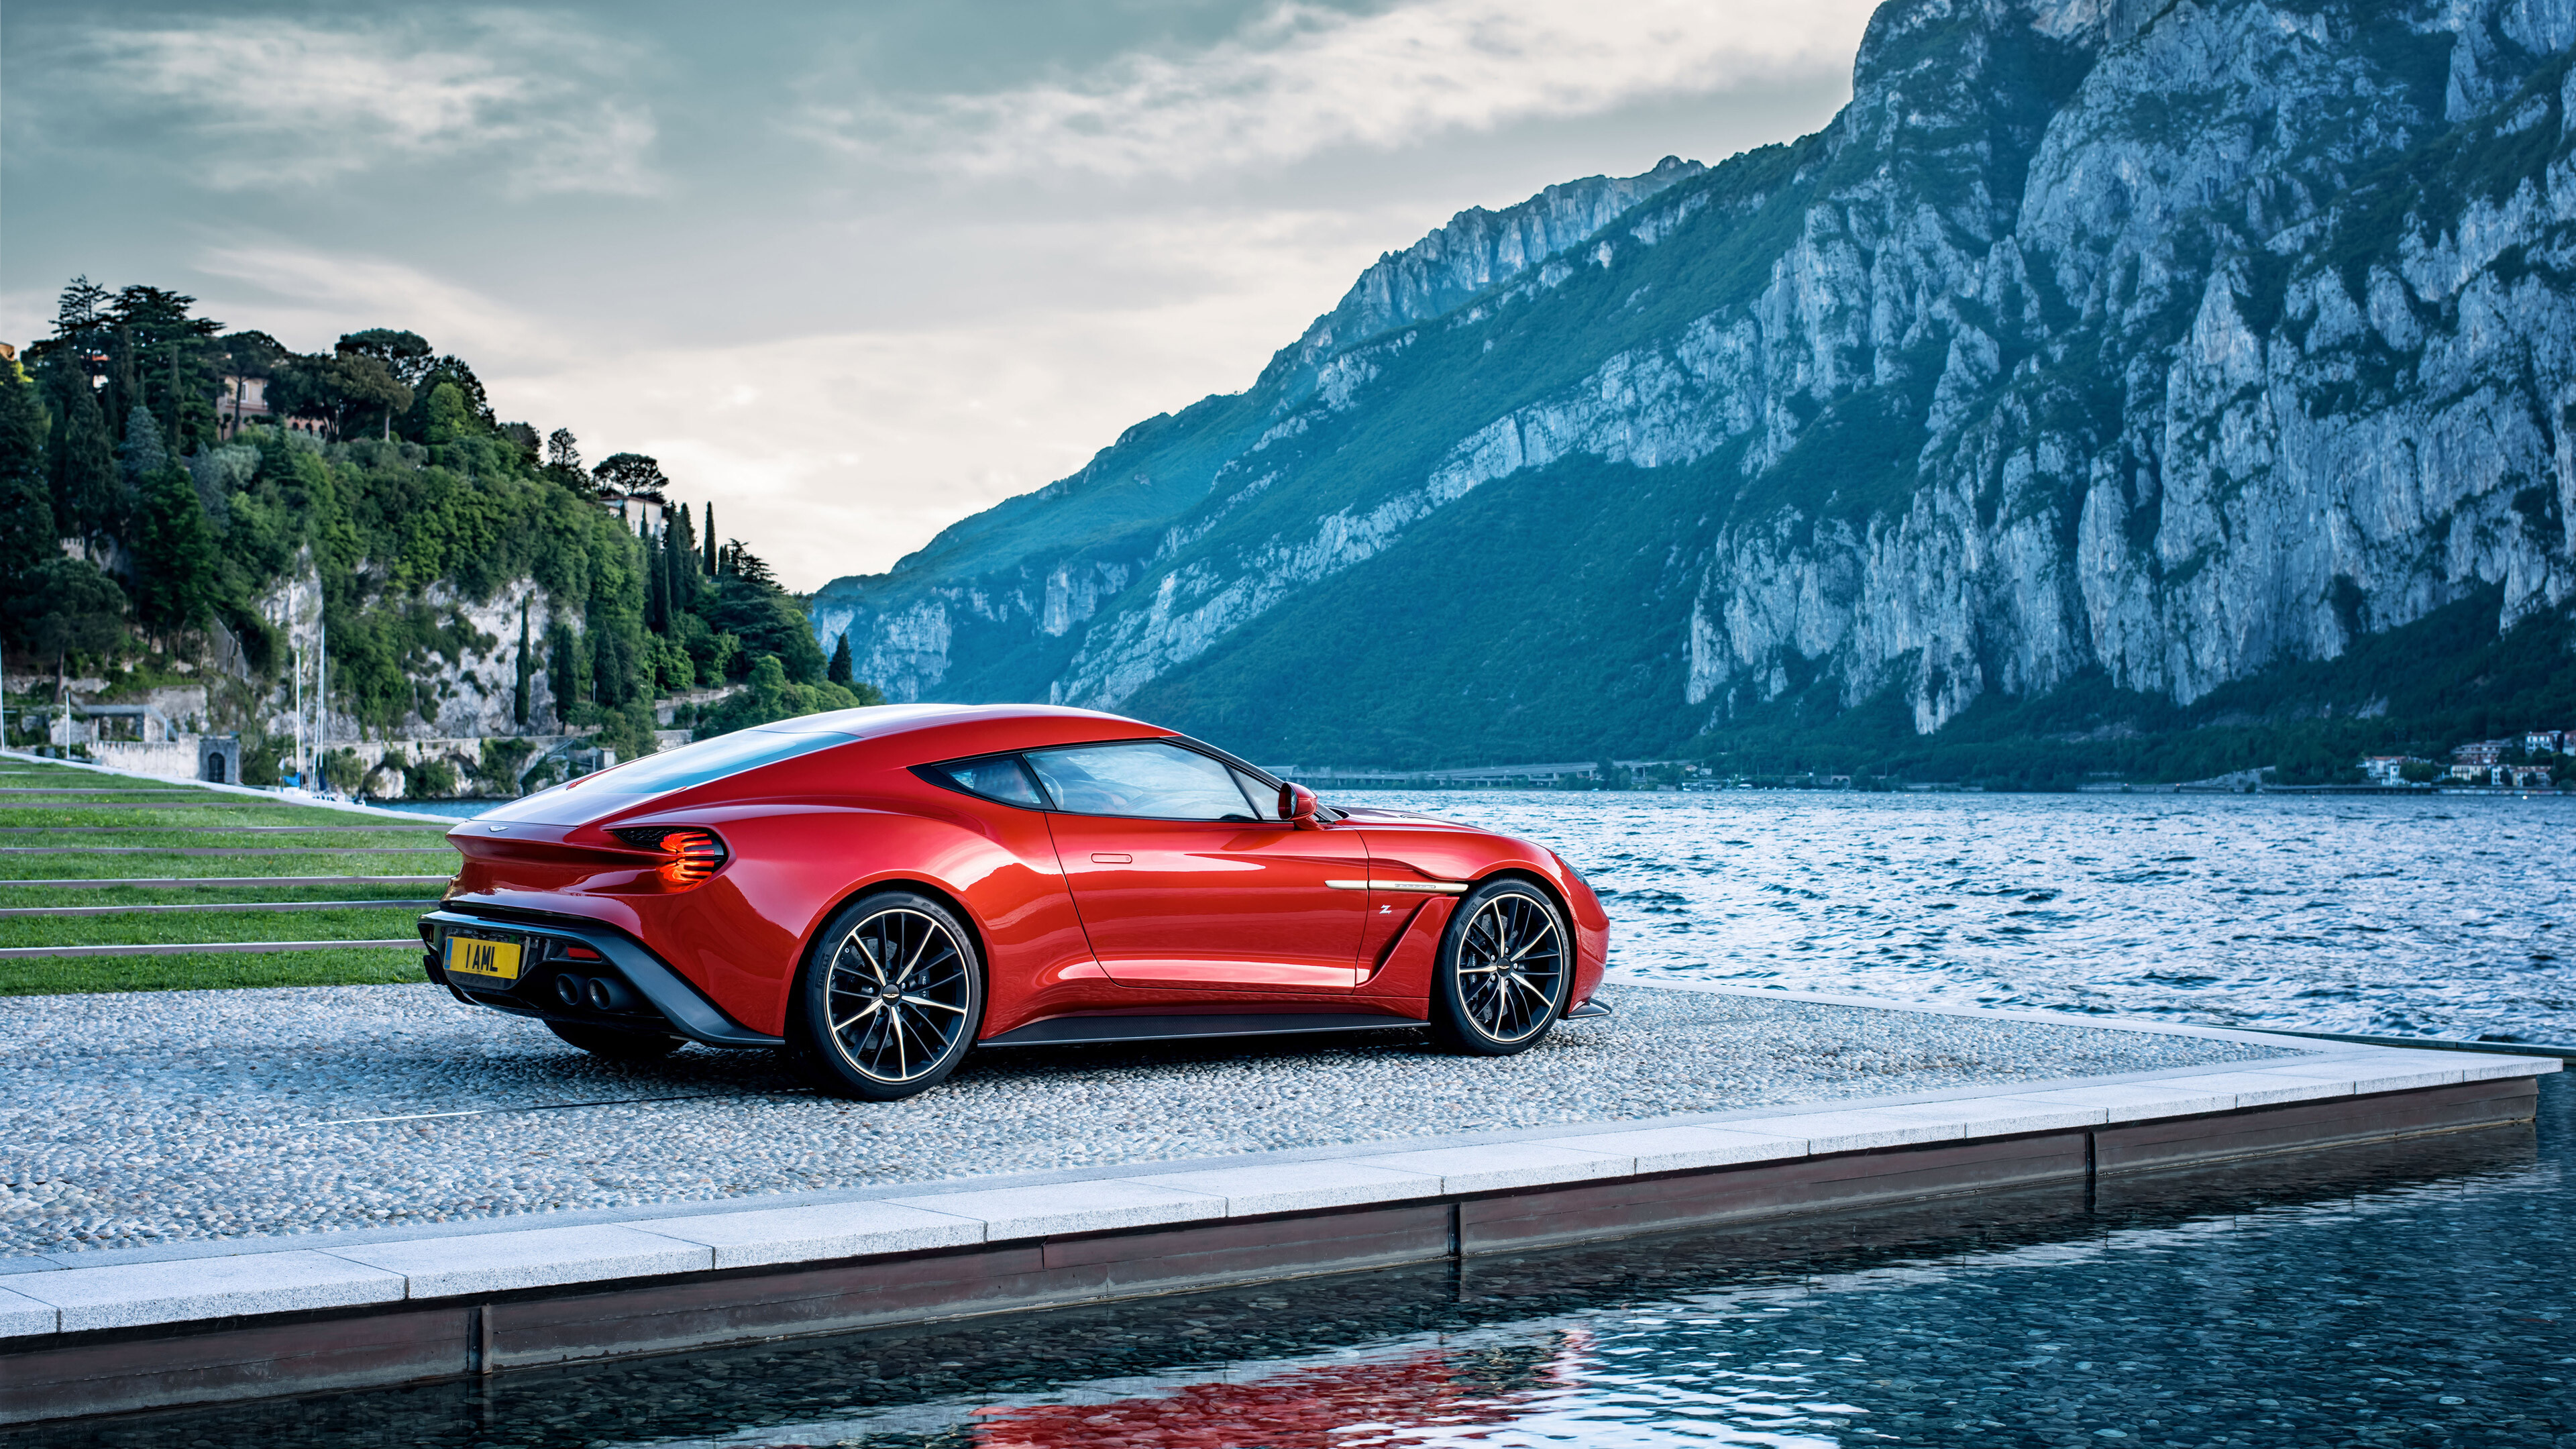 Aston Martin: Vanquish, A high-performance grand tourer introduced by British luxury automobile manufacturer. 3840x2160 4K Background.